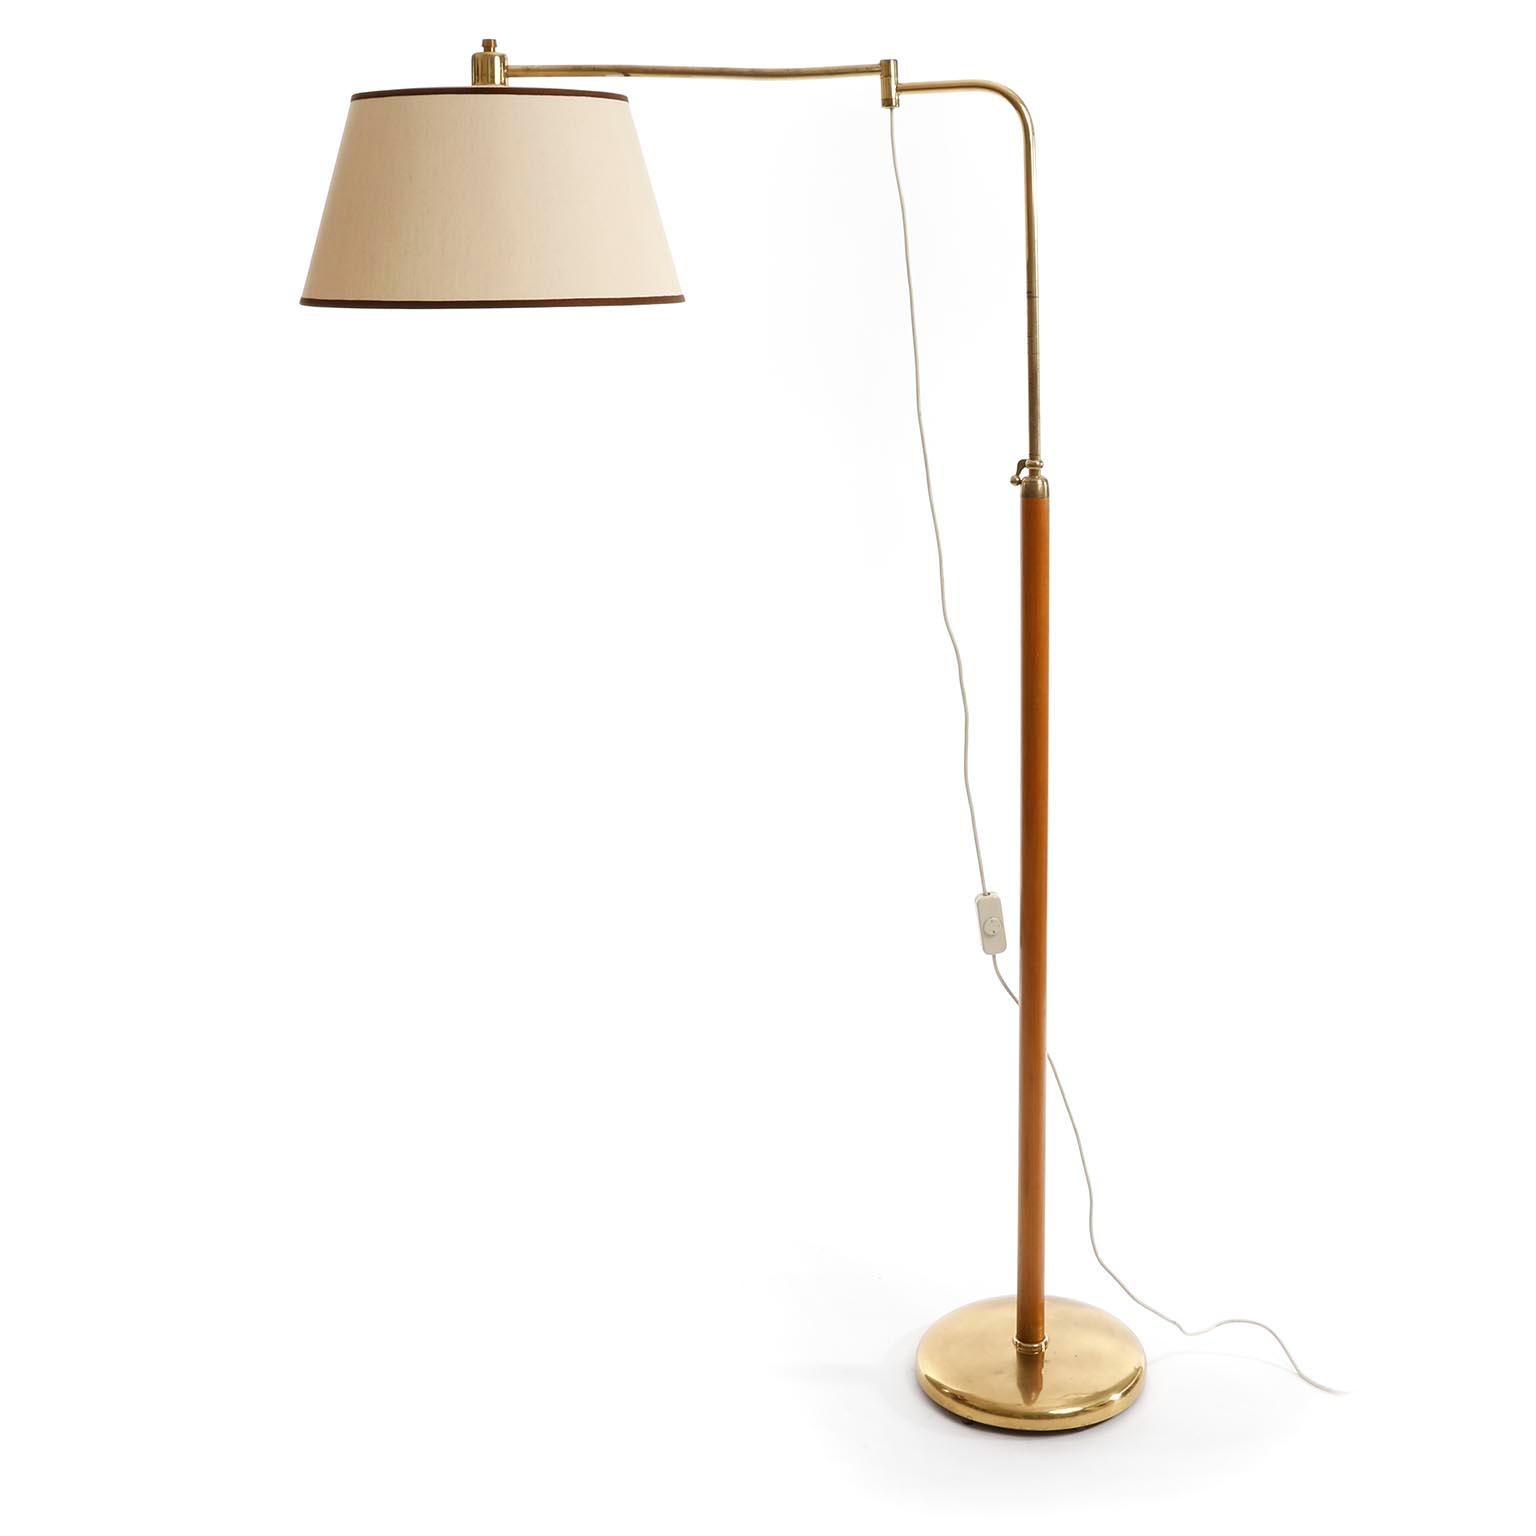 Mid-Century Modern Josef Frank Adjustable Floor Lamp 'Neolift' by J.T. Kalmar, Brass Wood, 1950s For Sale